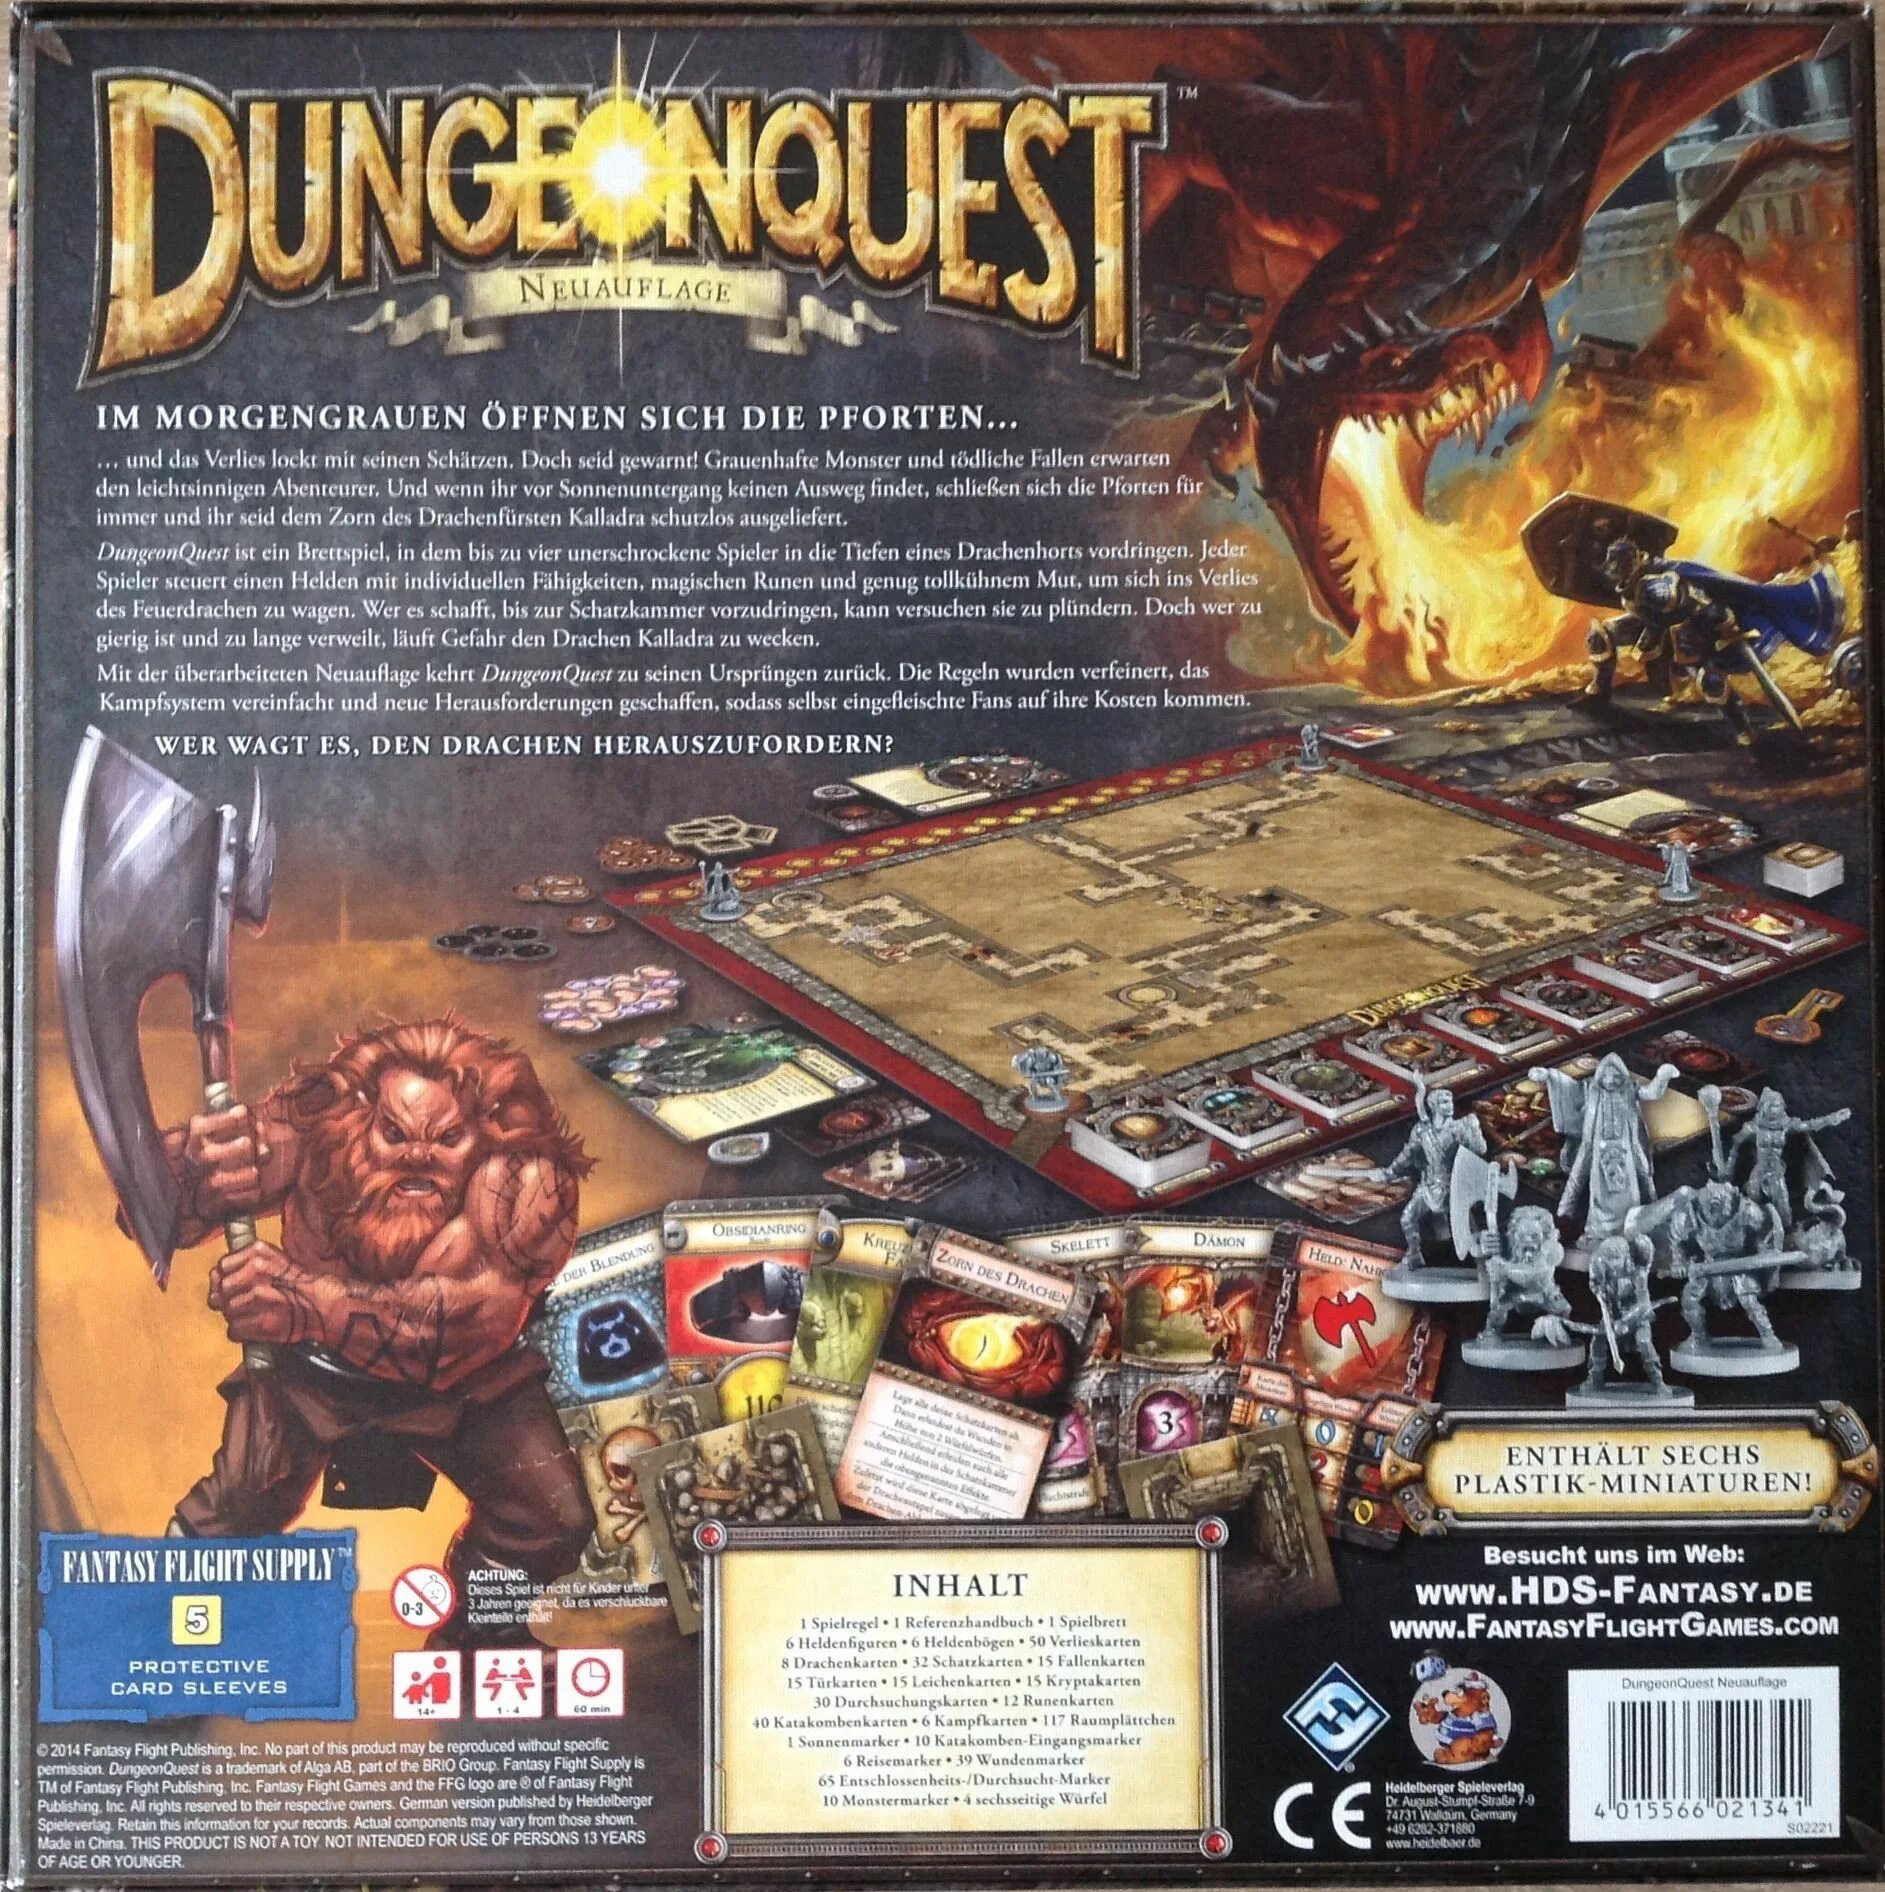 Dungeon Quest настолка. DUNGEONQUEST Revised Edition. Настольная игра DUNGEONQUEST. Dungeon Quest Revised Edition. Игра подземелья правила